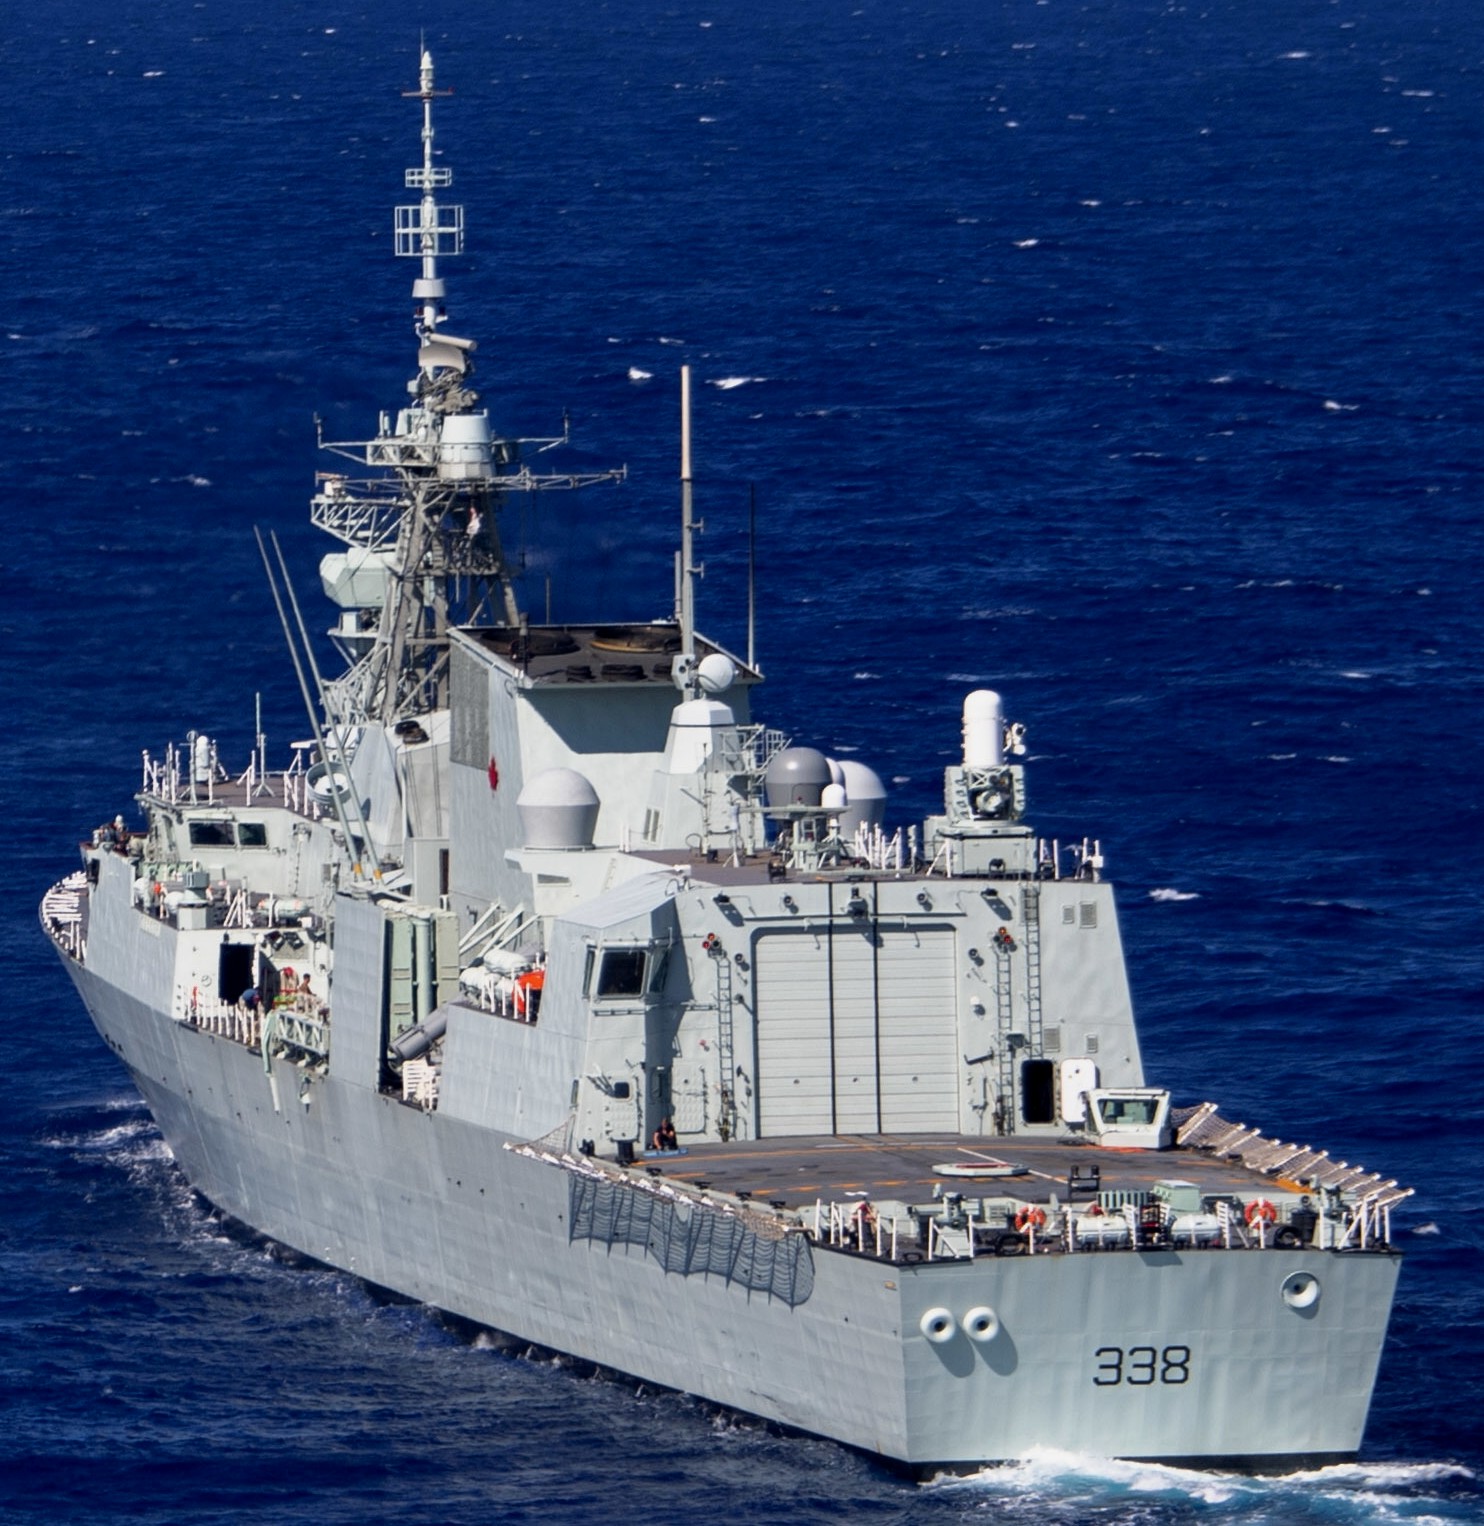 ffh-338 hmcs winnipeg halifax class helicopter patrol frigate ncsm royal canadian navy 31